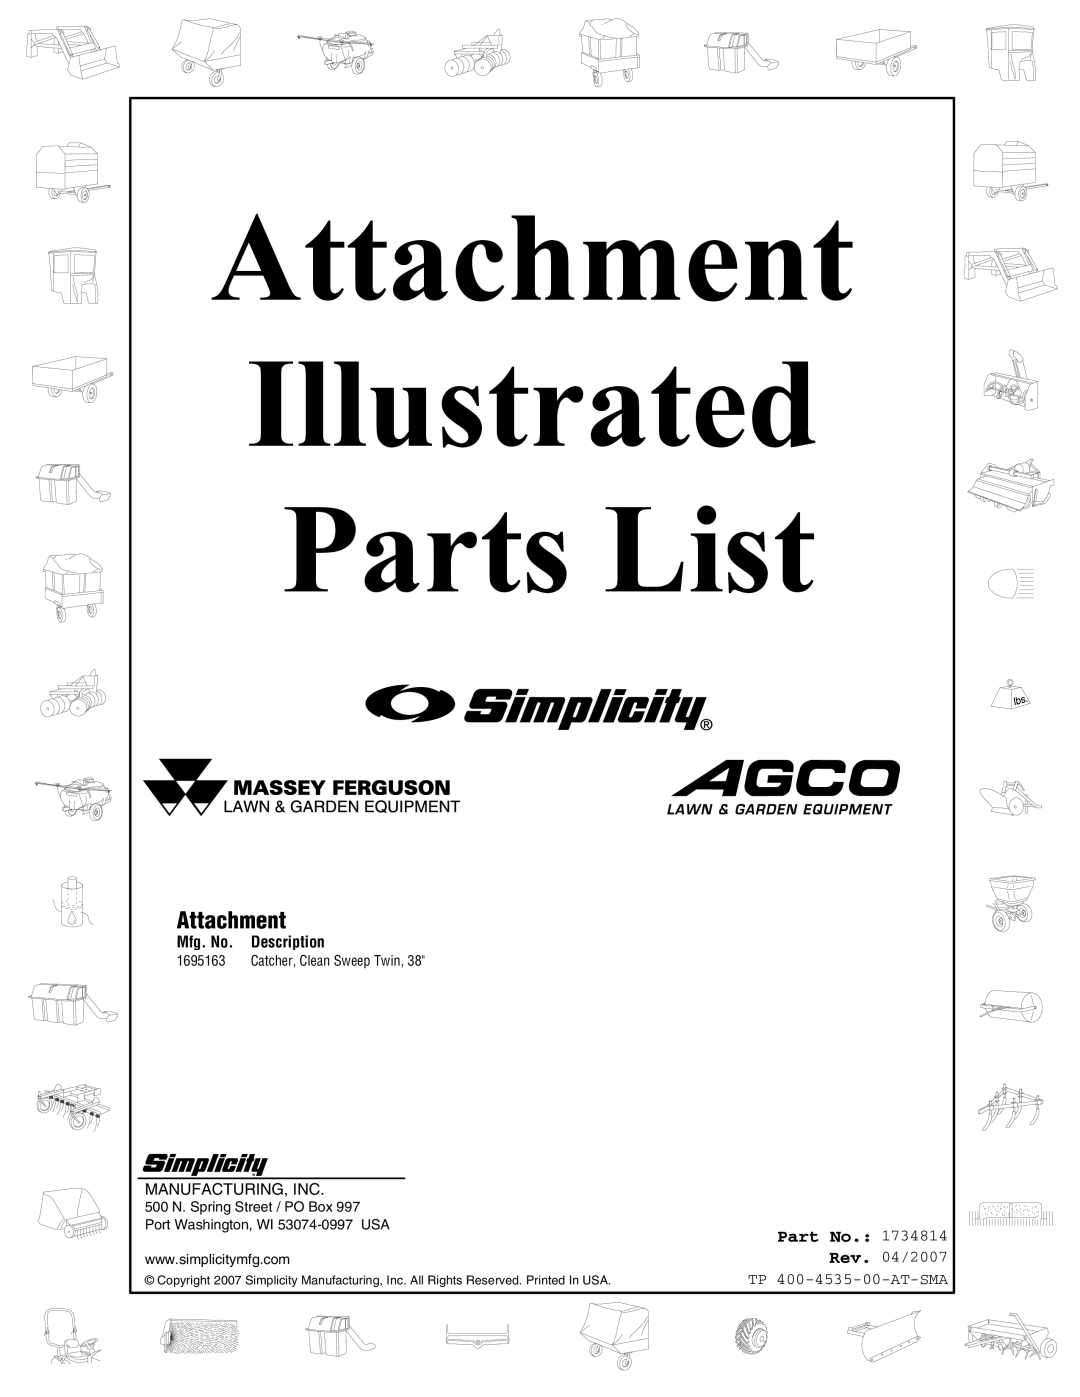 Simplicity 1695163 manual Attachment, Mfg. No, Description, Illustrated, Parts List, Rev. 04/2007, TP 400-4535-00-AT-SMA 